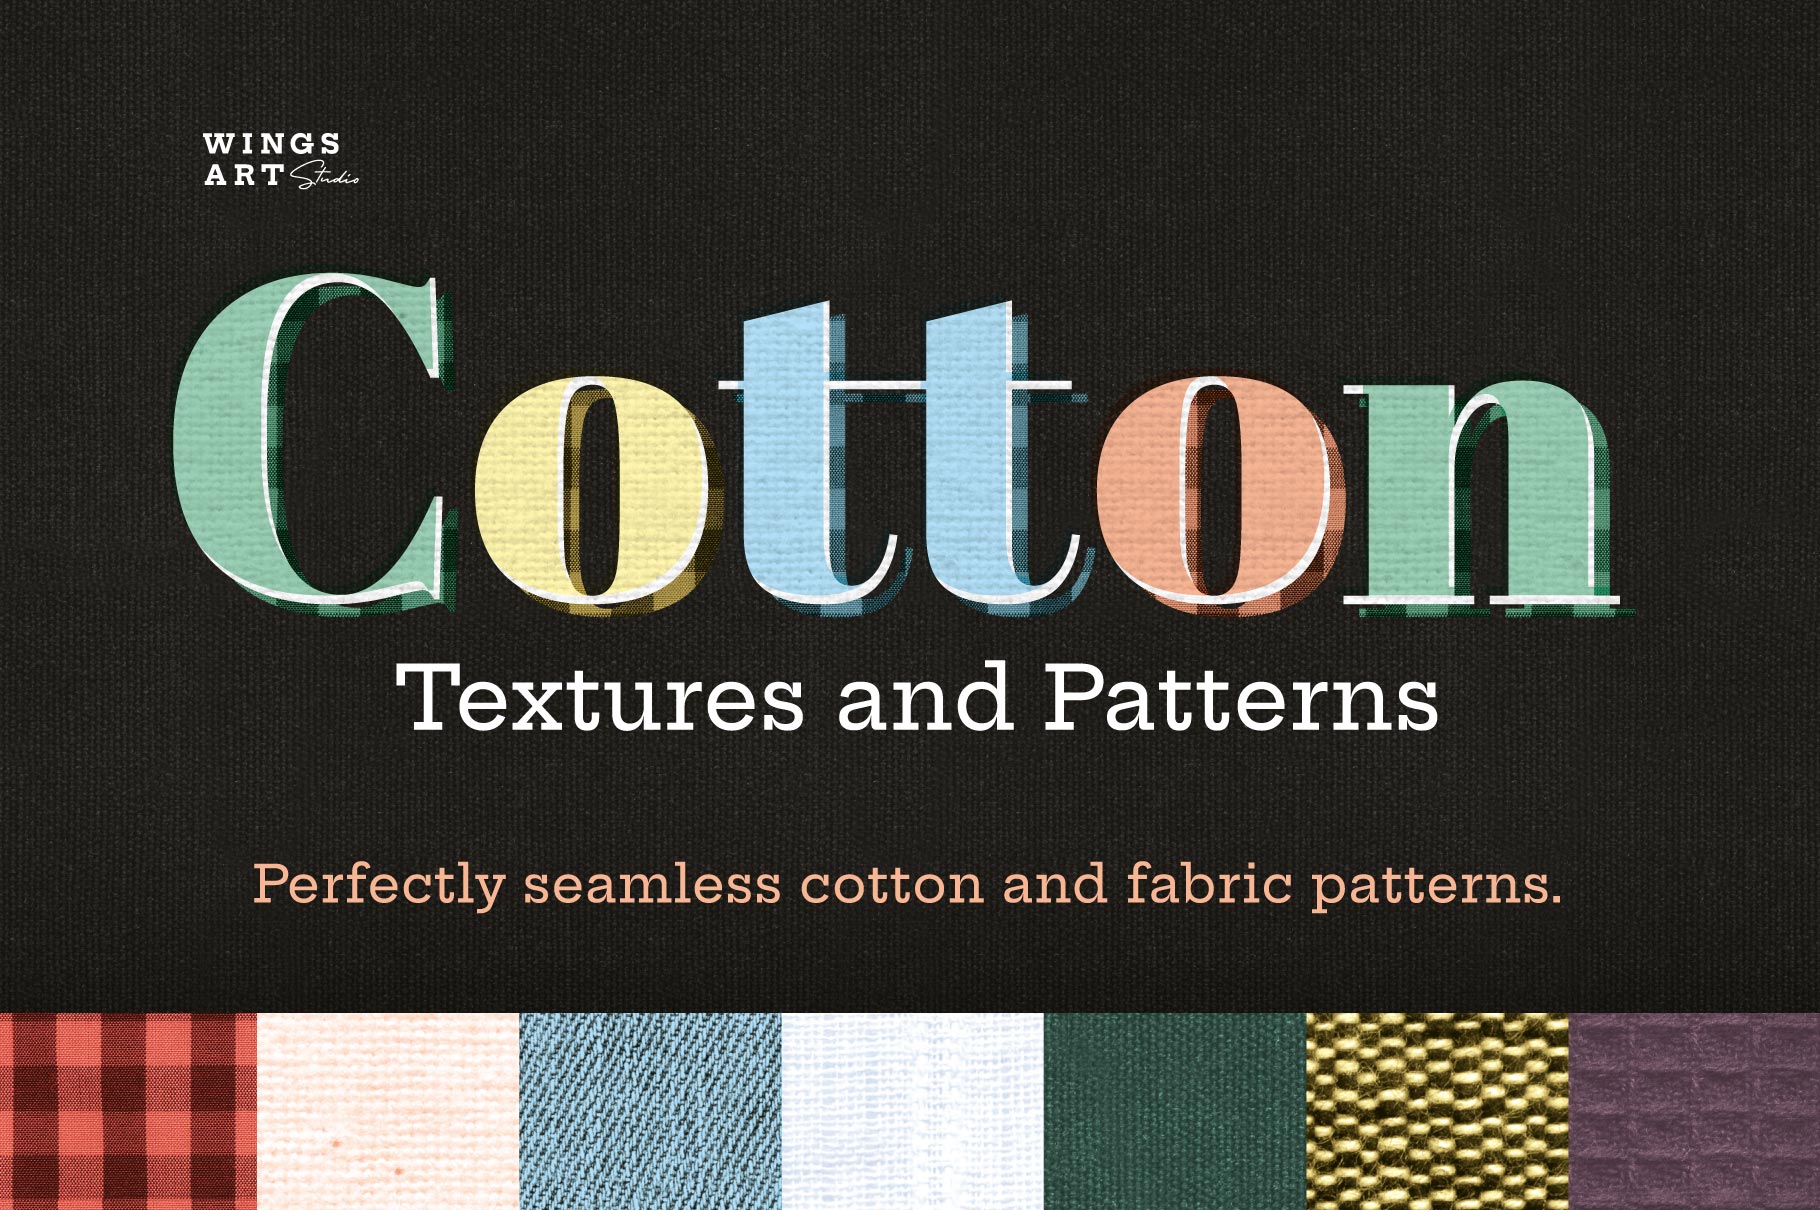 https://wingsart.studio/wp-content/uploads/2020/02/wingsart-cotton-textures-patterns.jpg